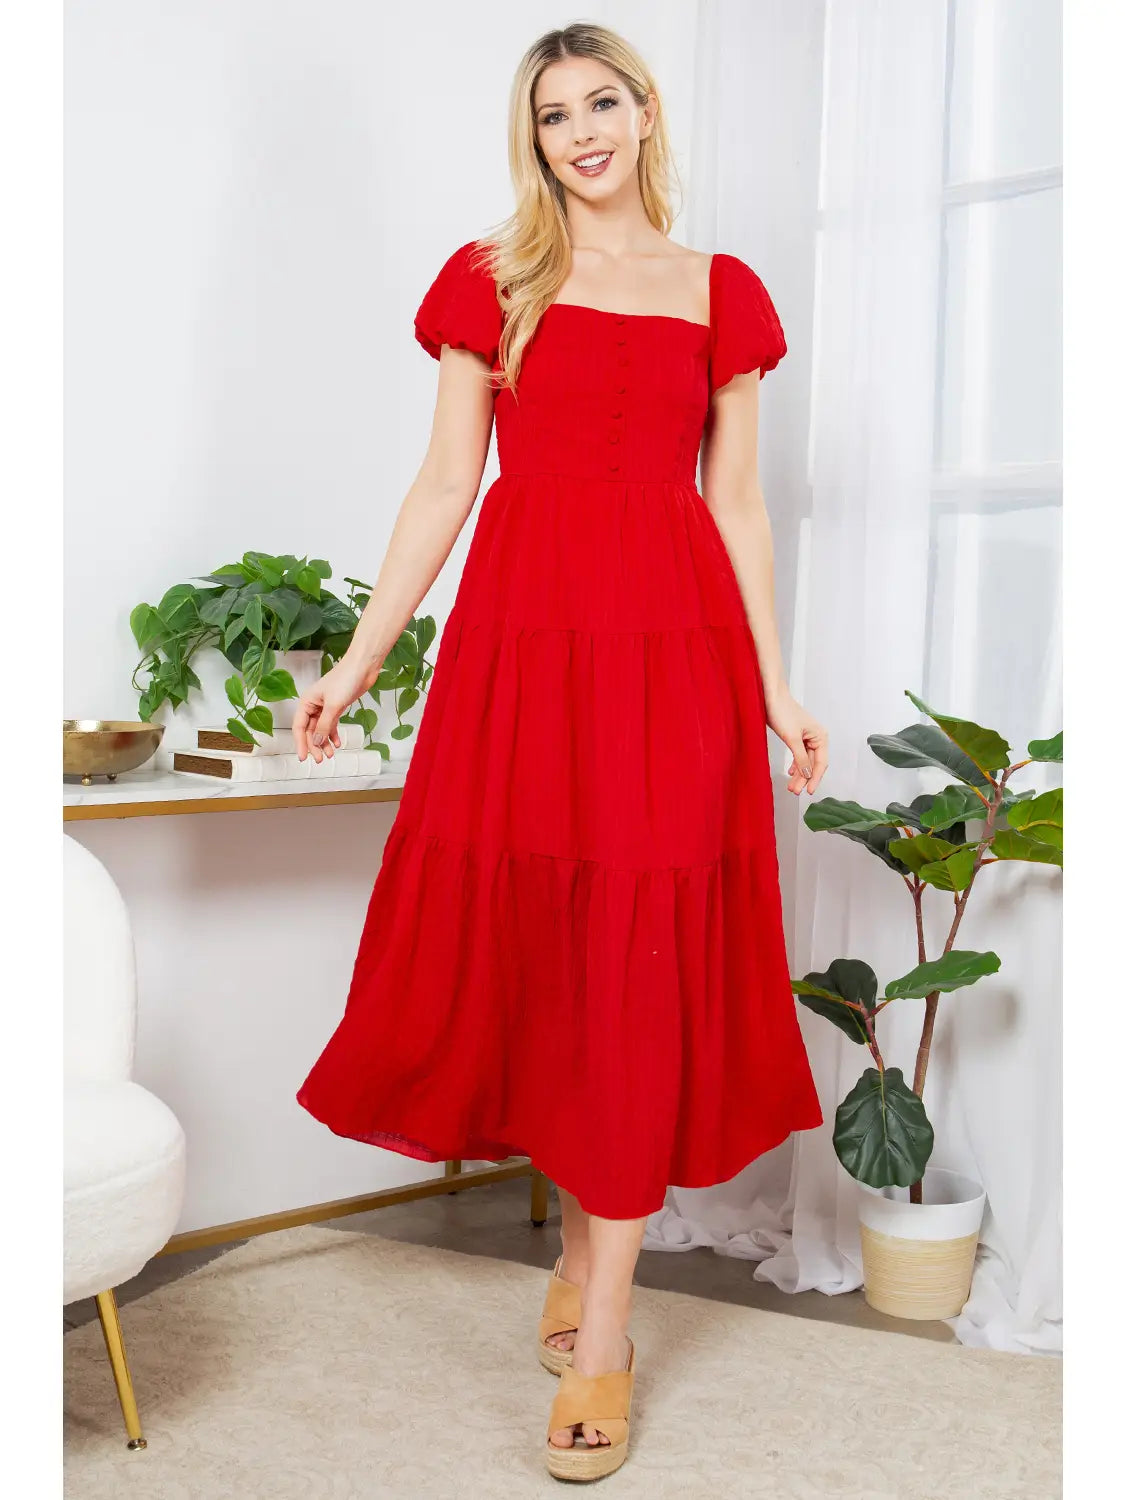 Red Puff Sleeve Dress